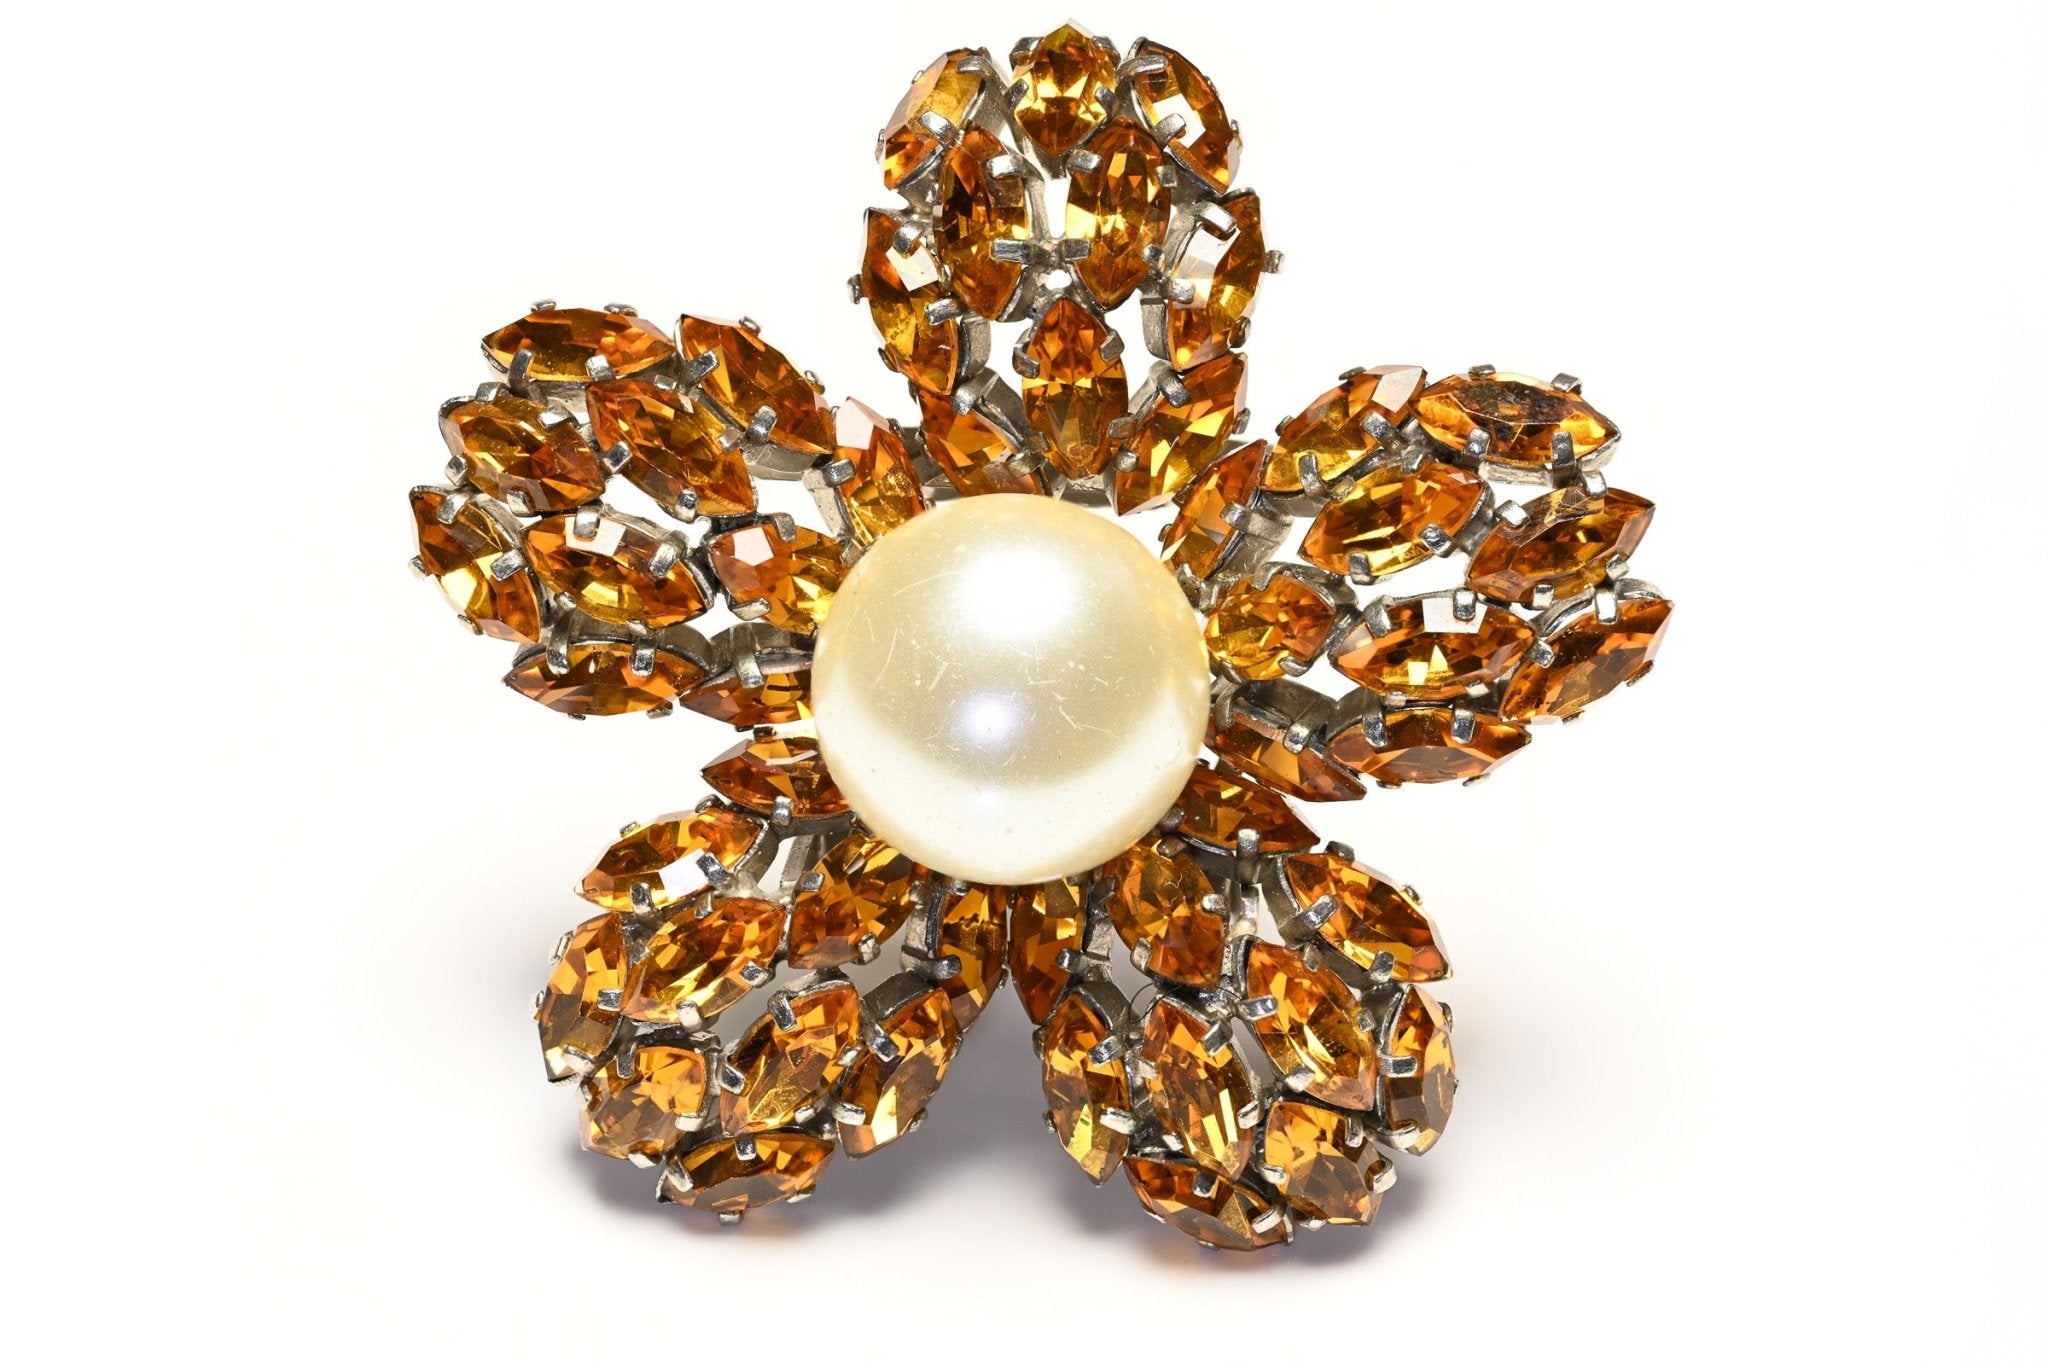 Cristobal Balenciaga by Roger Jean-Pierre Paris 1950's Brown Crystal Pearl Flower Brooch